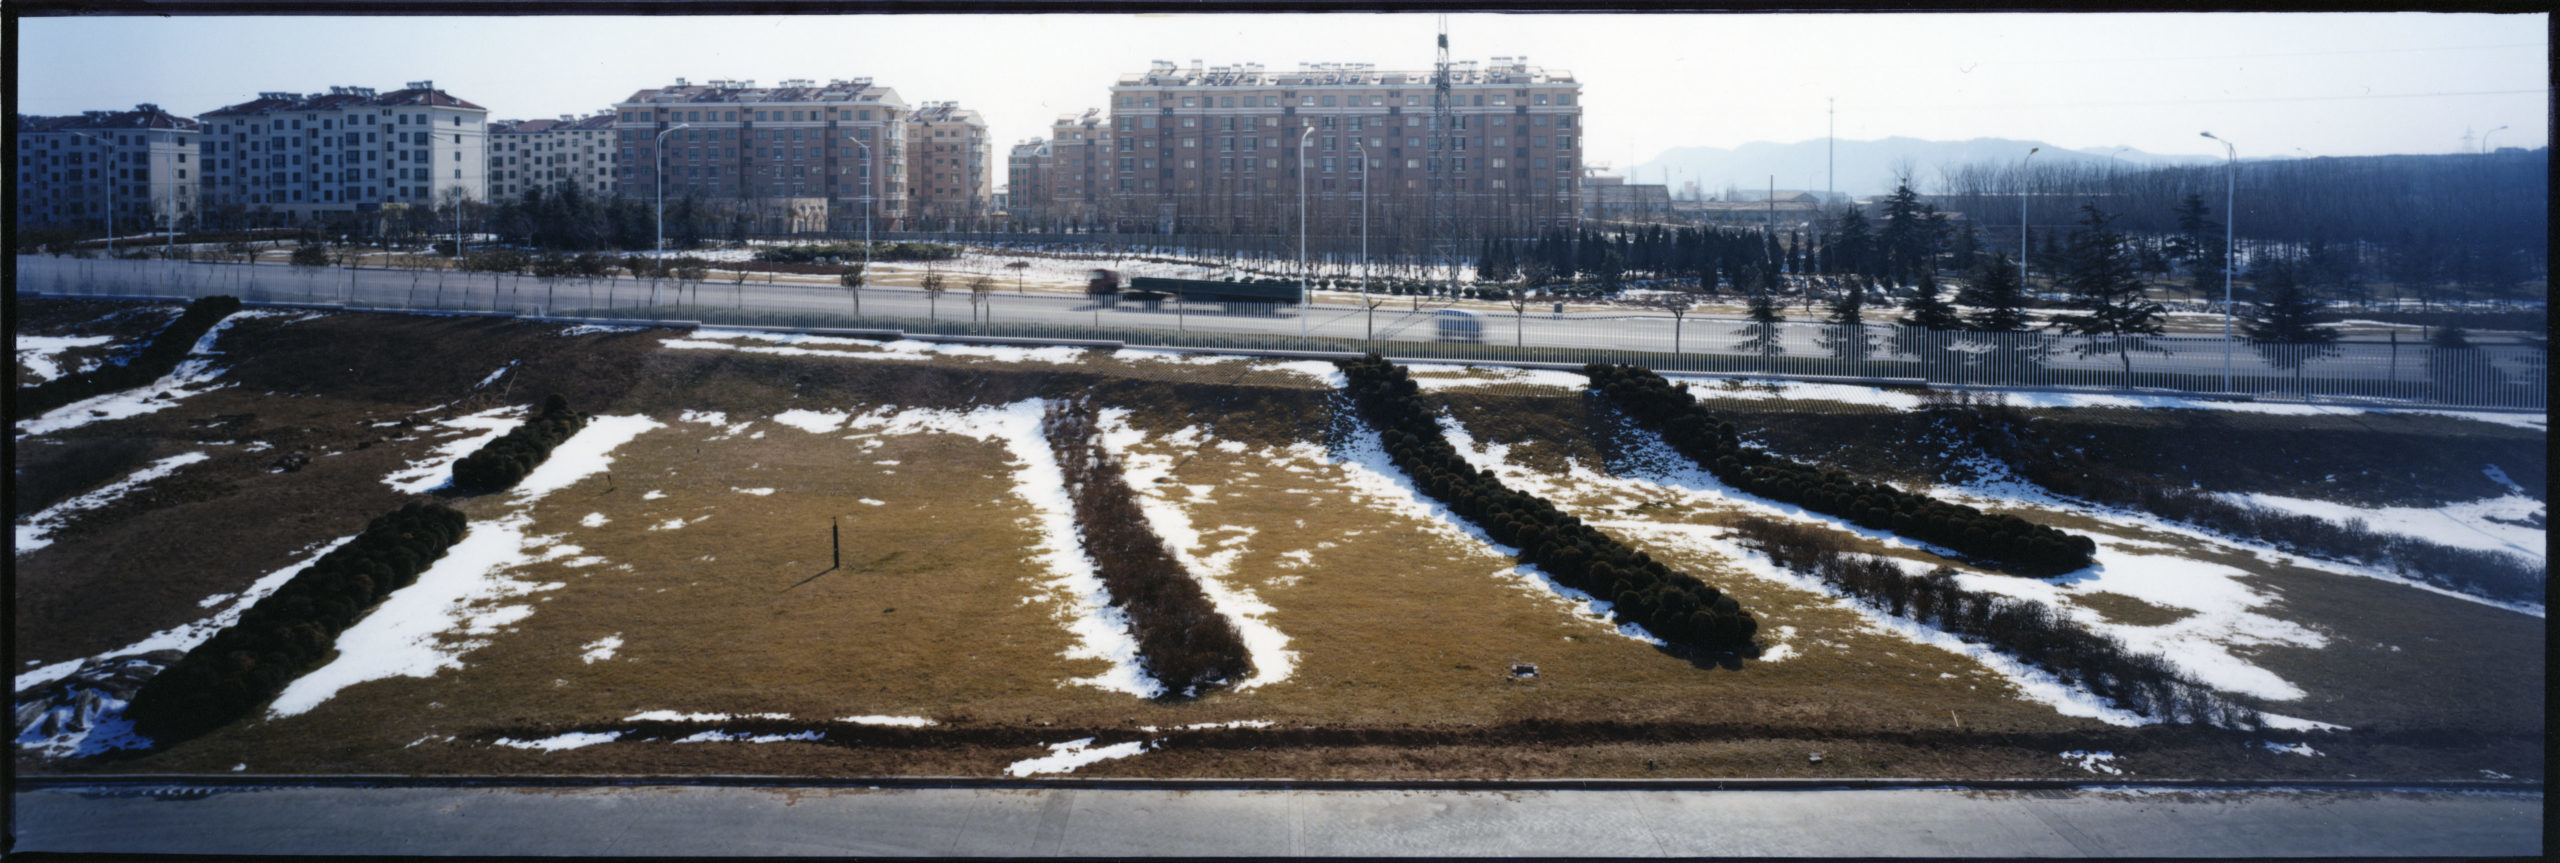 Landscaping  for Tenaris Industrial Plant, Qingdao, China